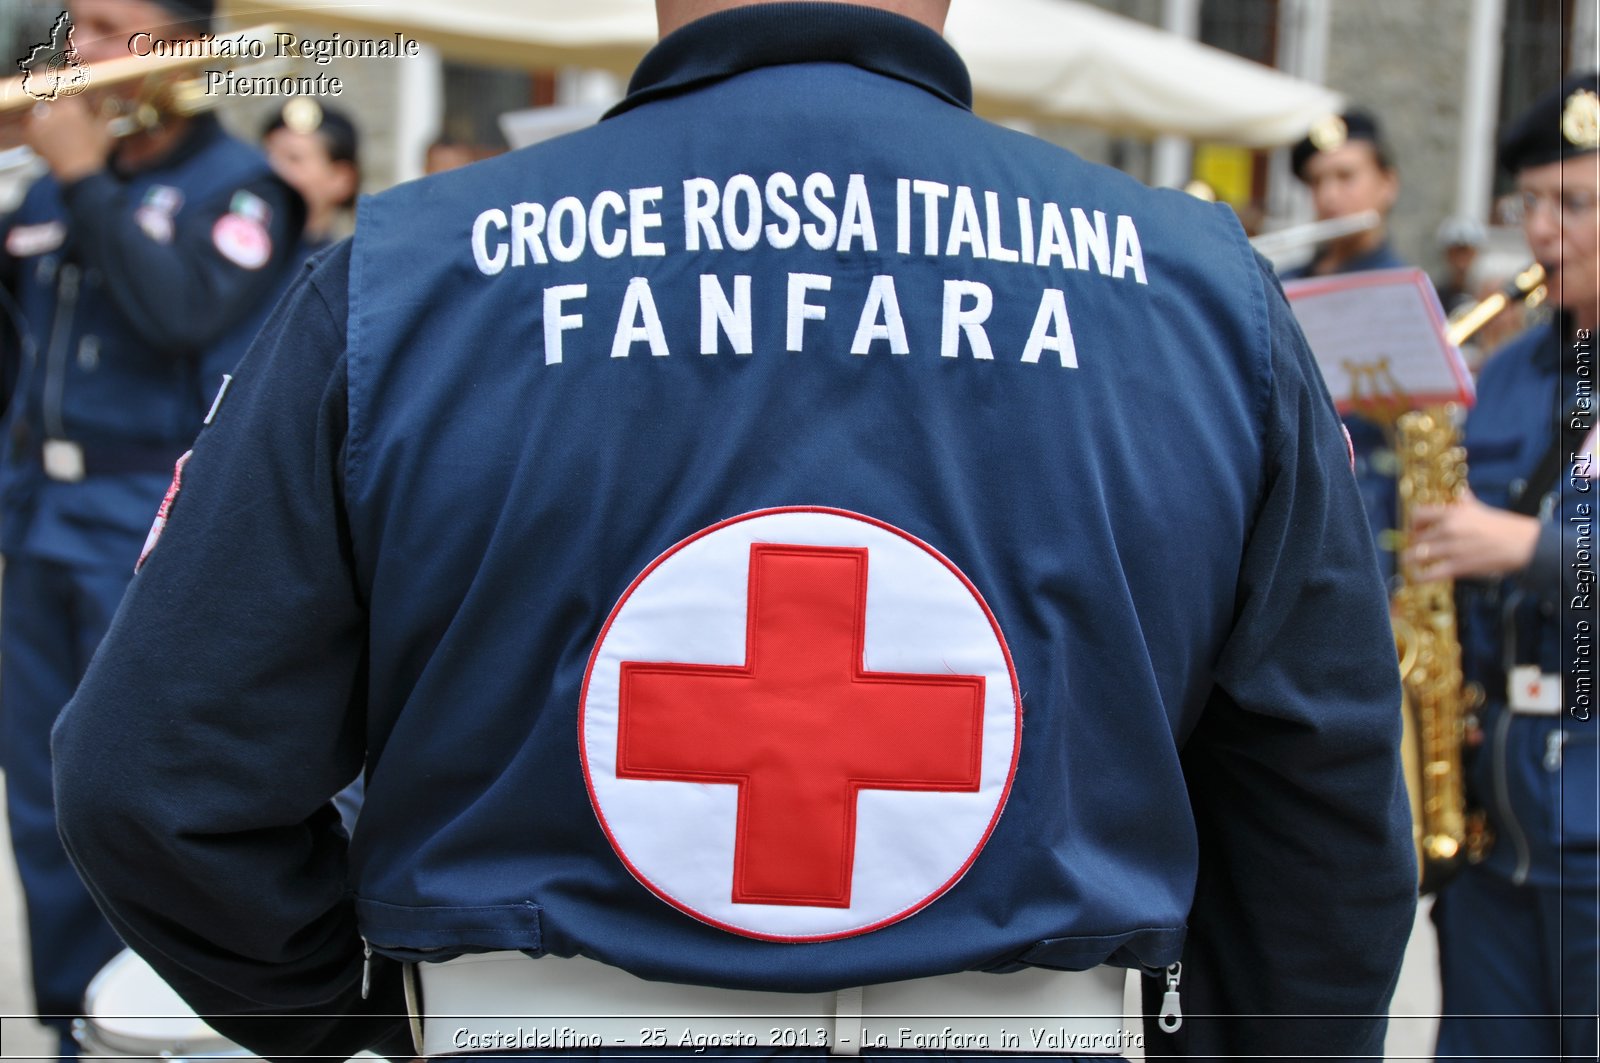 Casteldelfino - 25 Agosto 2013 - La Fanfara in Valvaraita - Croce Rossa Italiana - Comitato Regionale del Piemonte